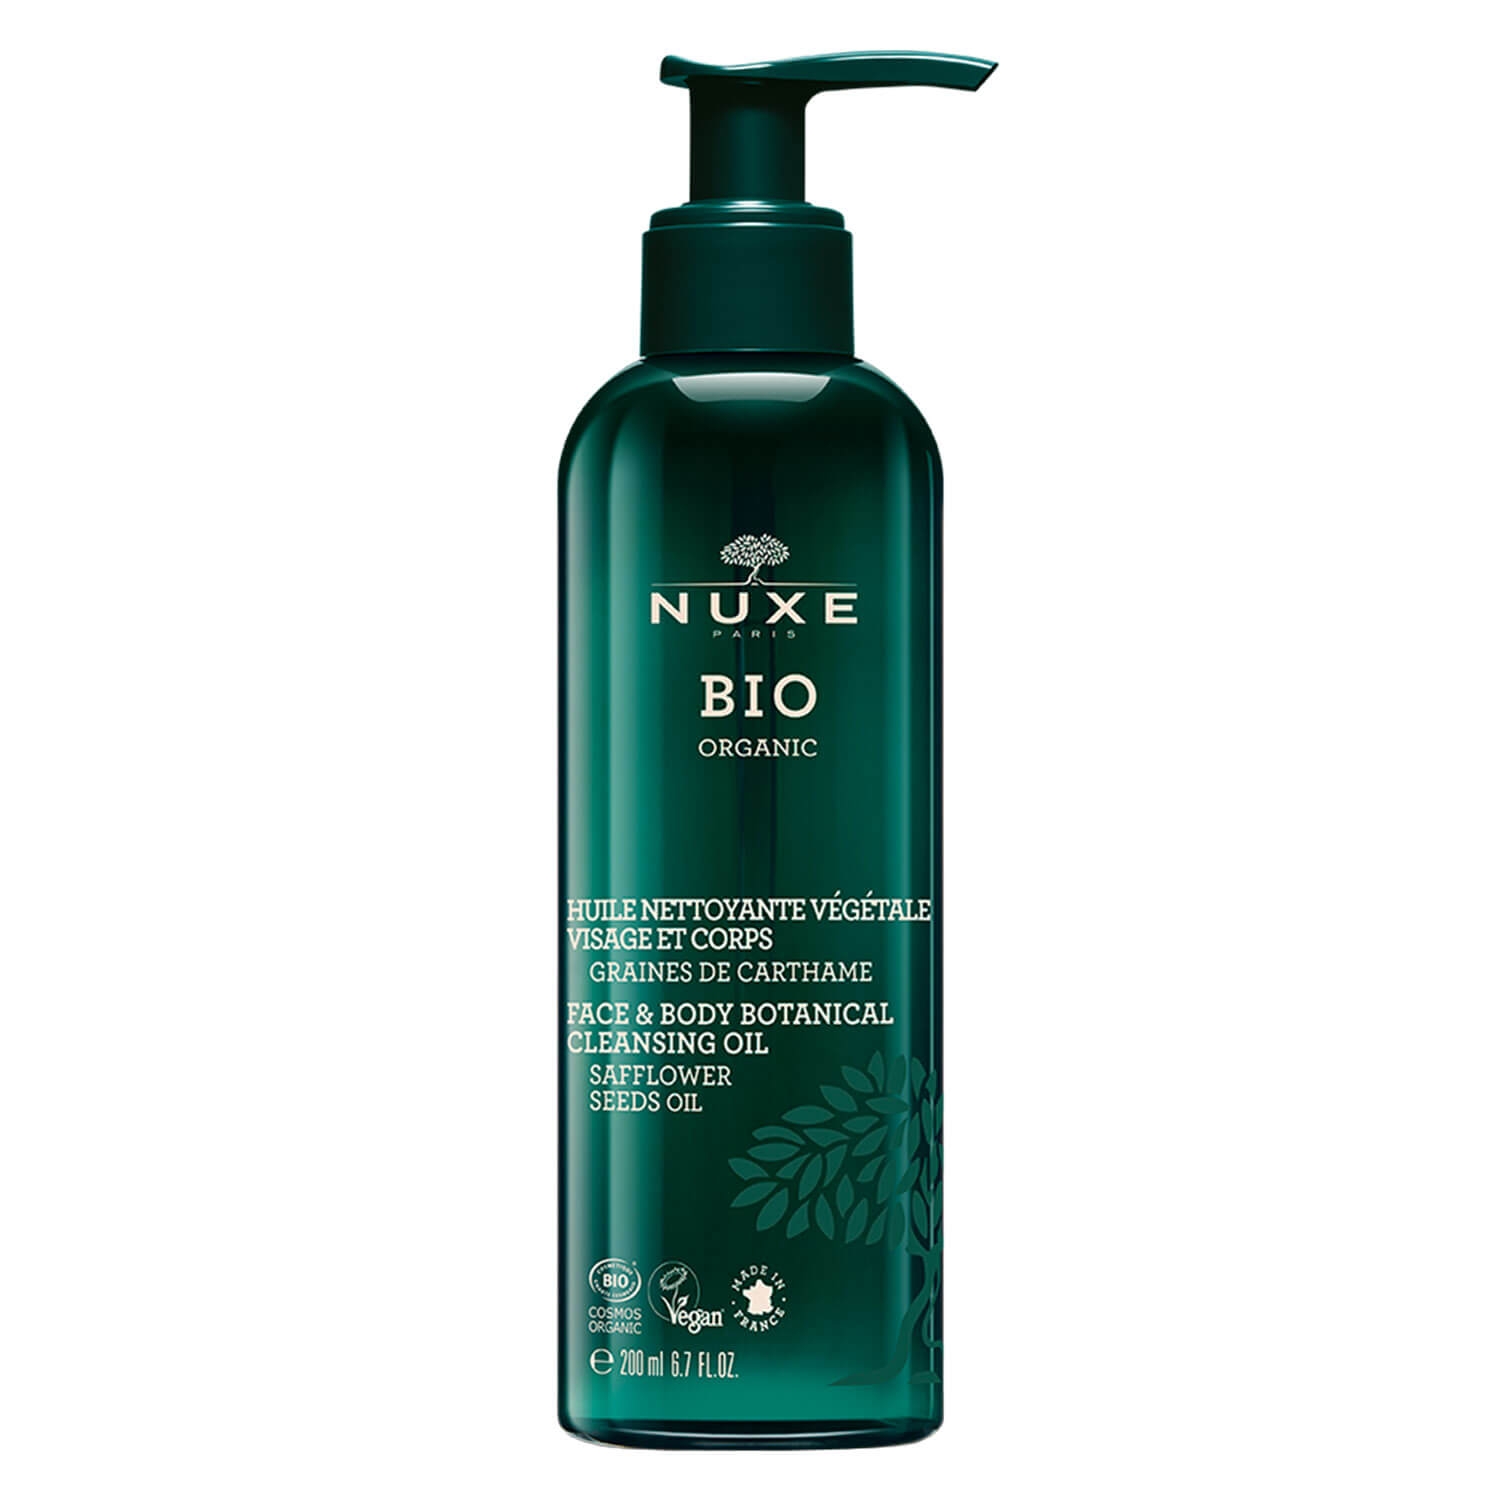 Product image from Nuxe Bio - Huile Nettoyante Végétale Visage & Corps